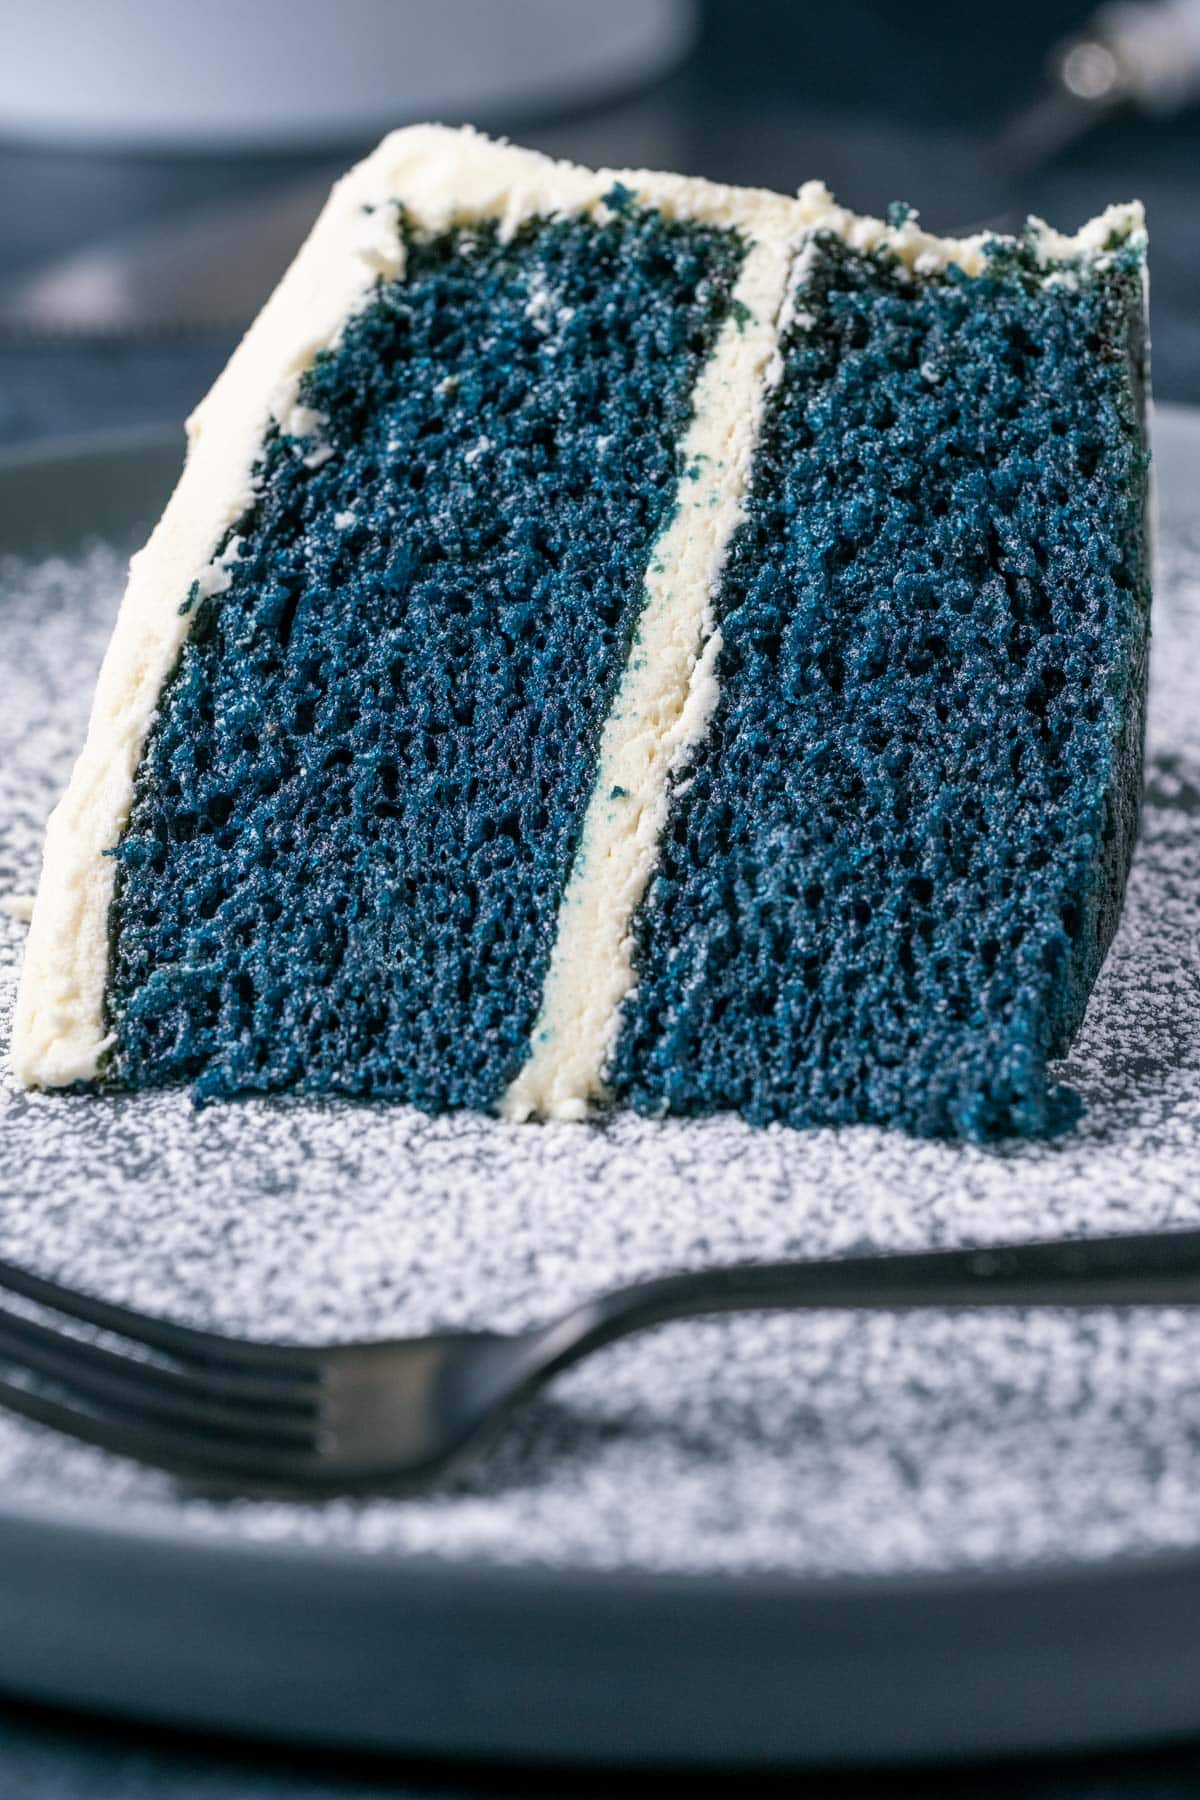 Slice of blue velvet cake on a plate with a cake fork.